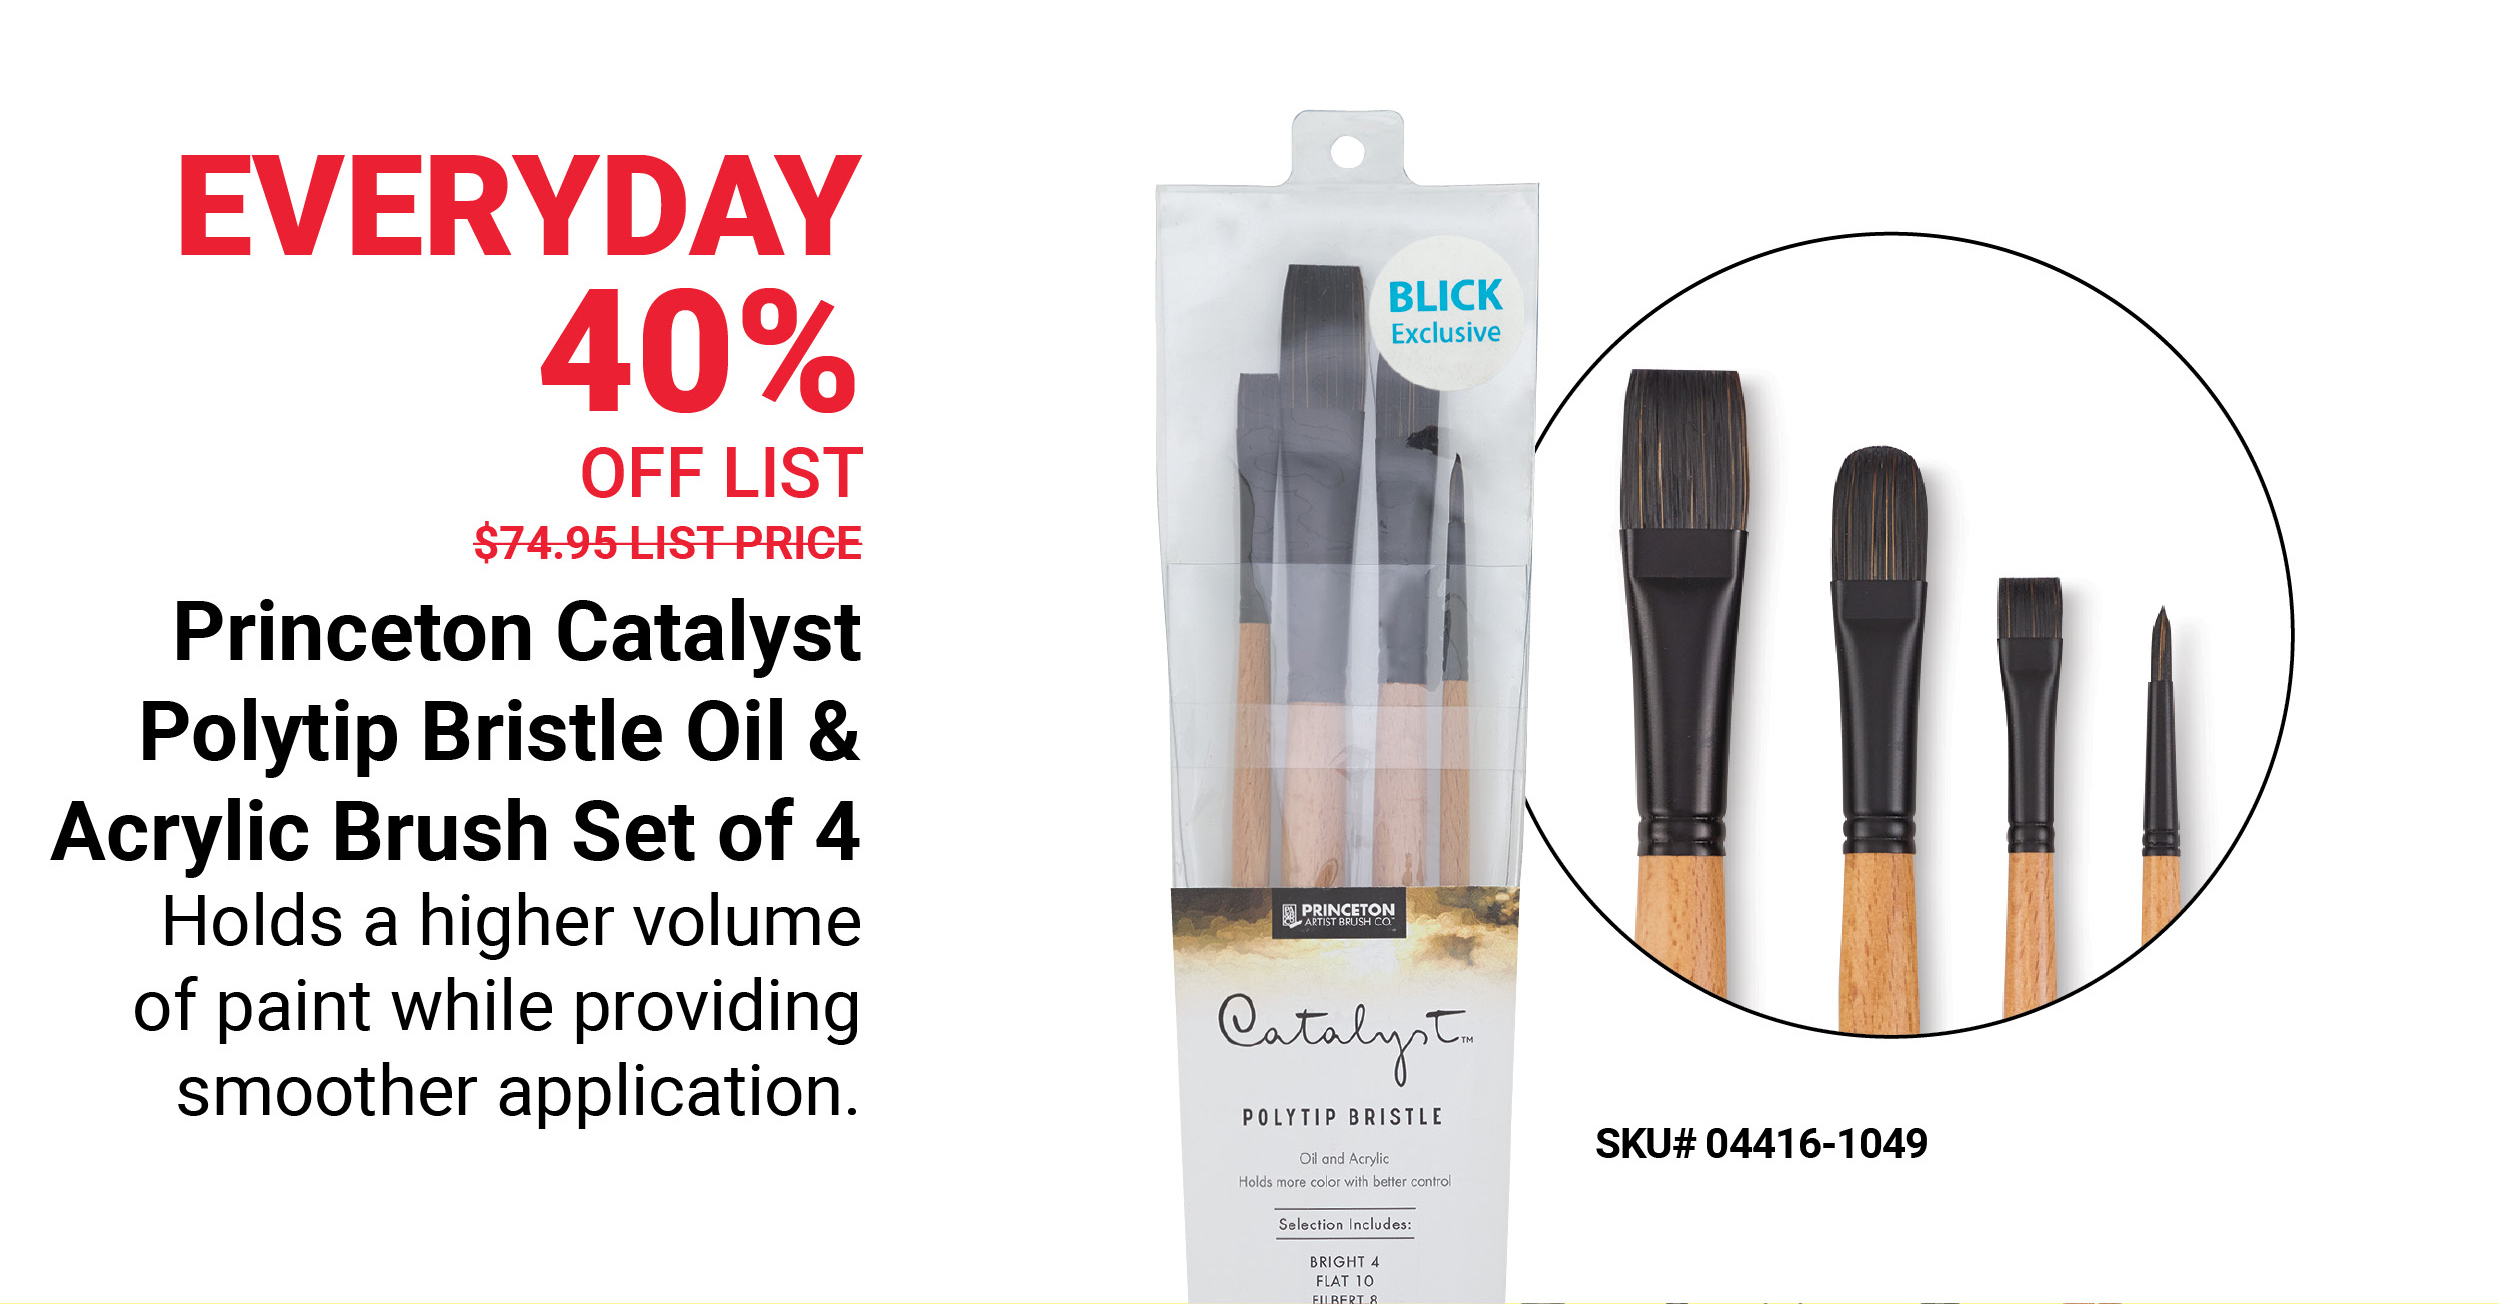 Princeton Catalyst Polytip Bristle Oil & Acrylic Brush Set of 4 Everyday 40% Off List